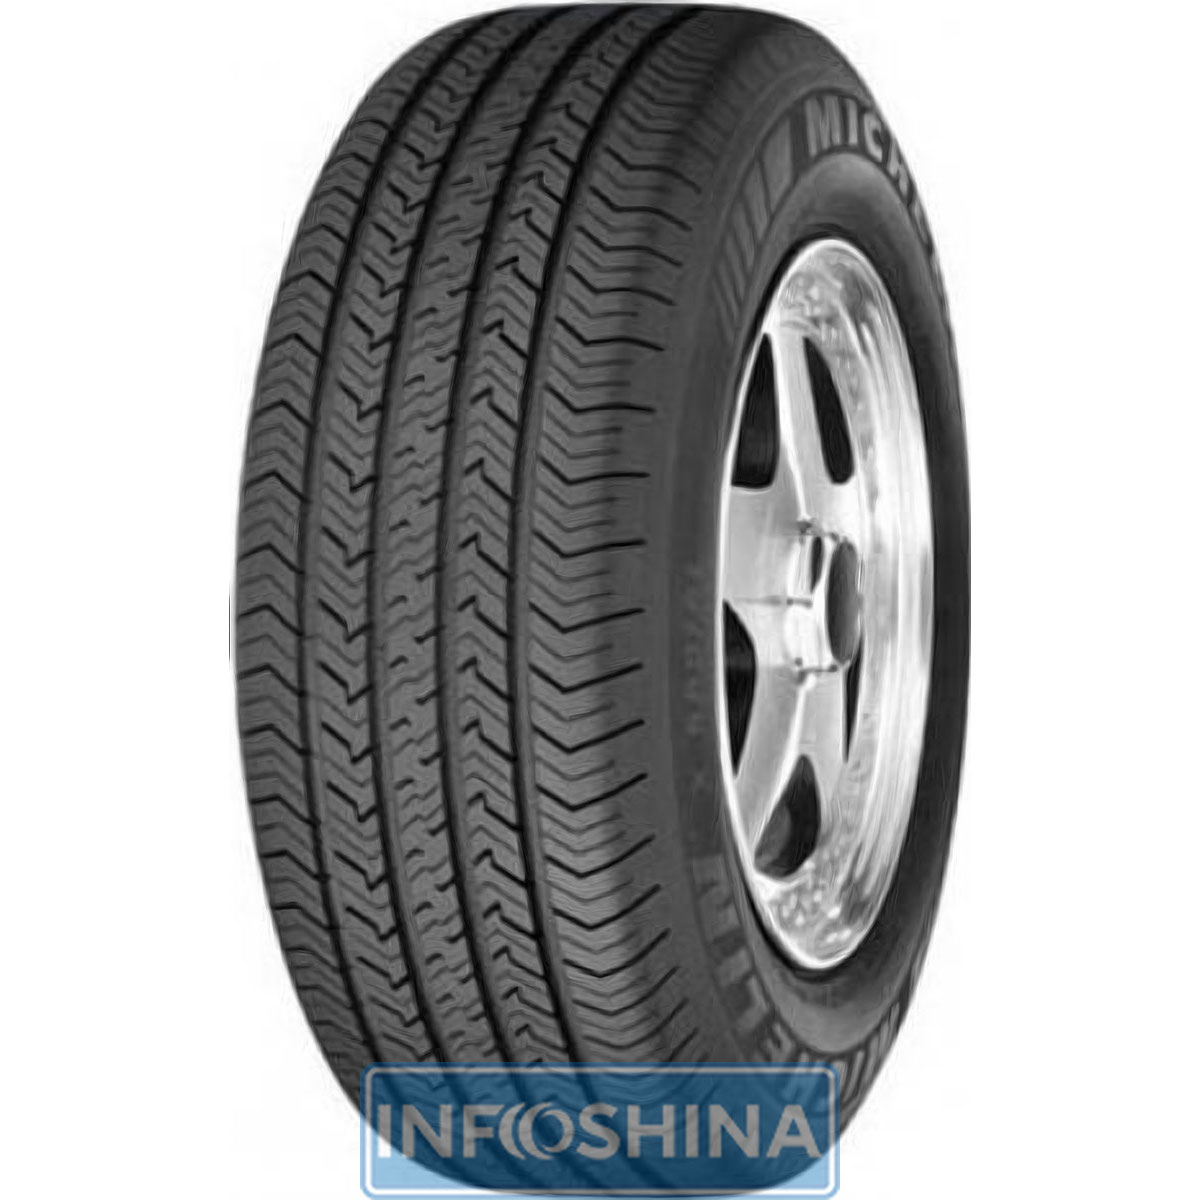 Купить шины Michelin X-Radial DT 215/65 R16 95T